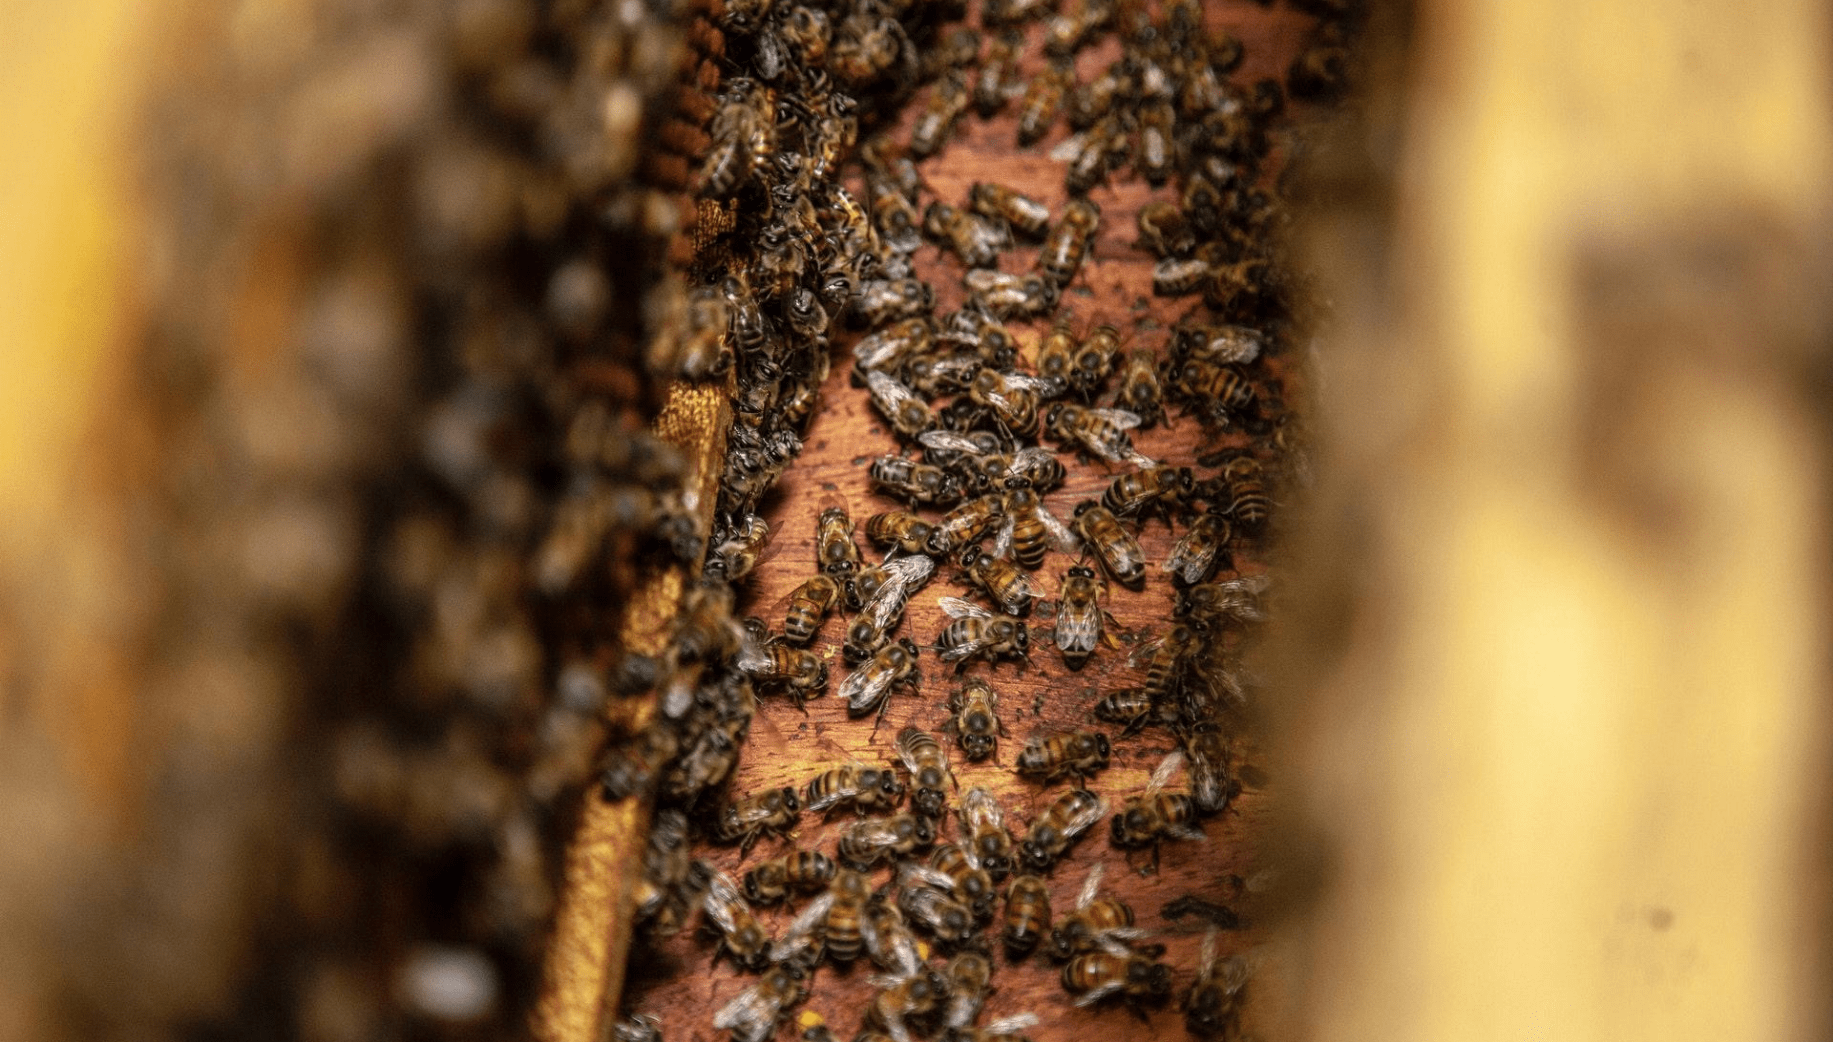 Honey bees around a Ksing